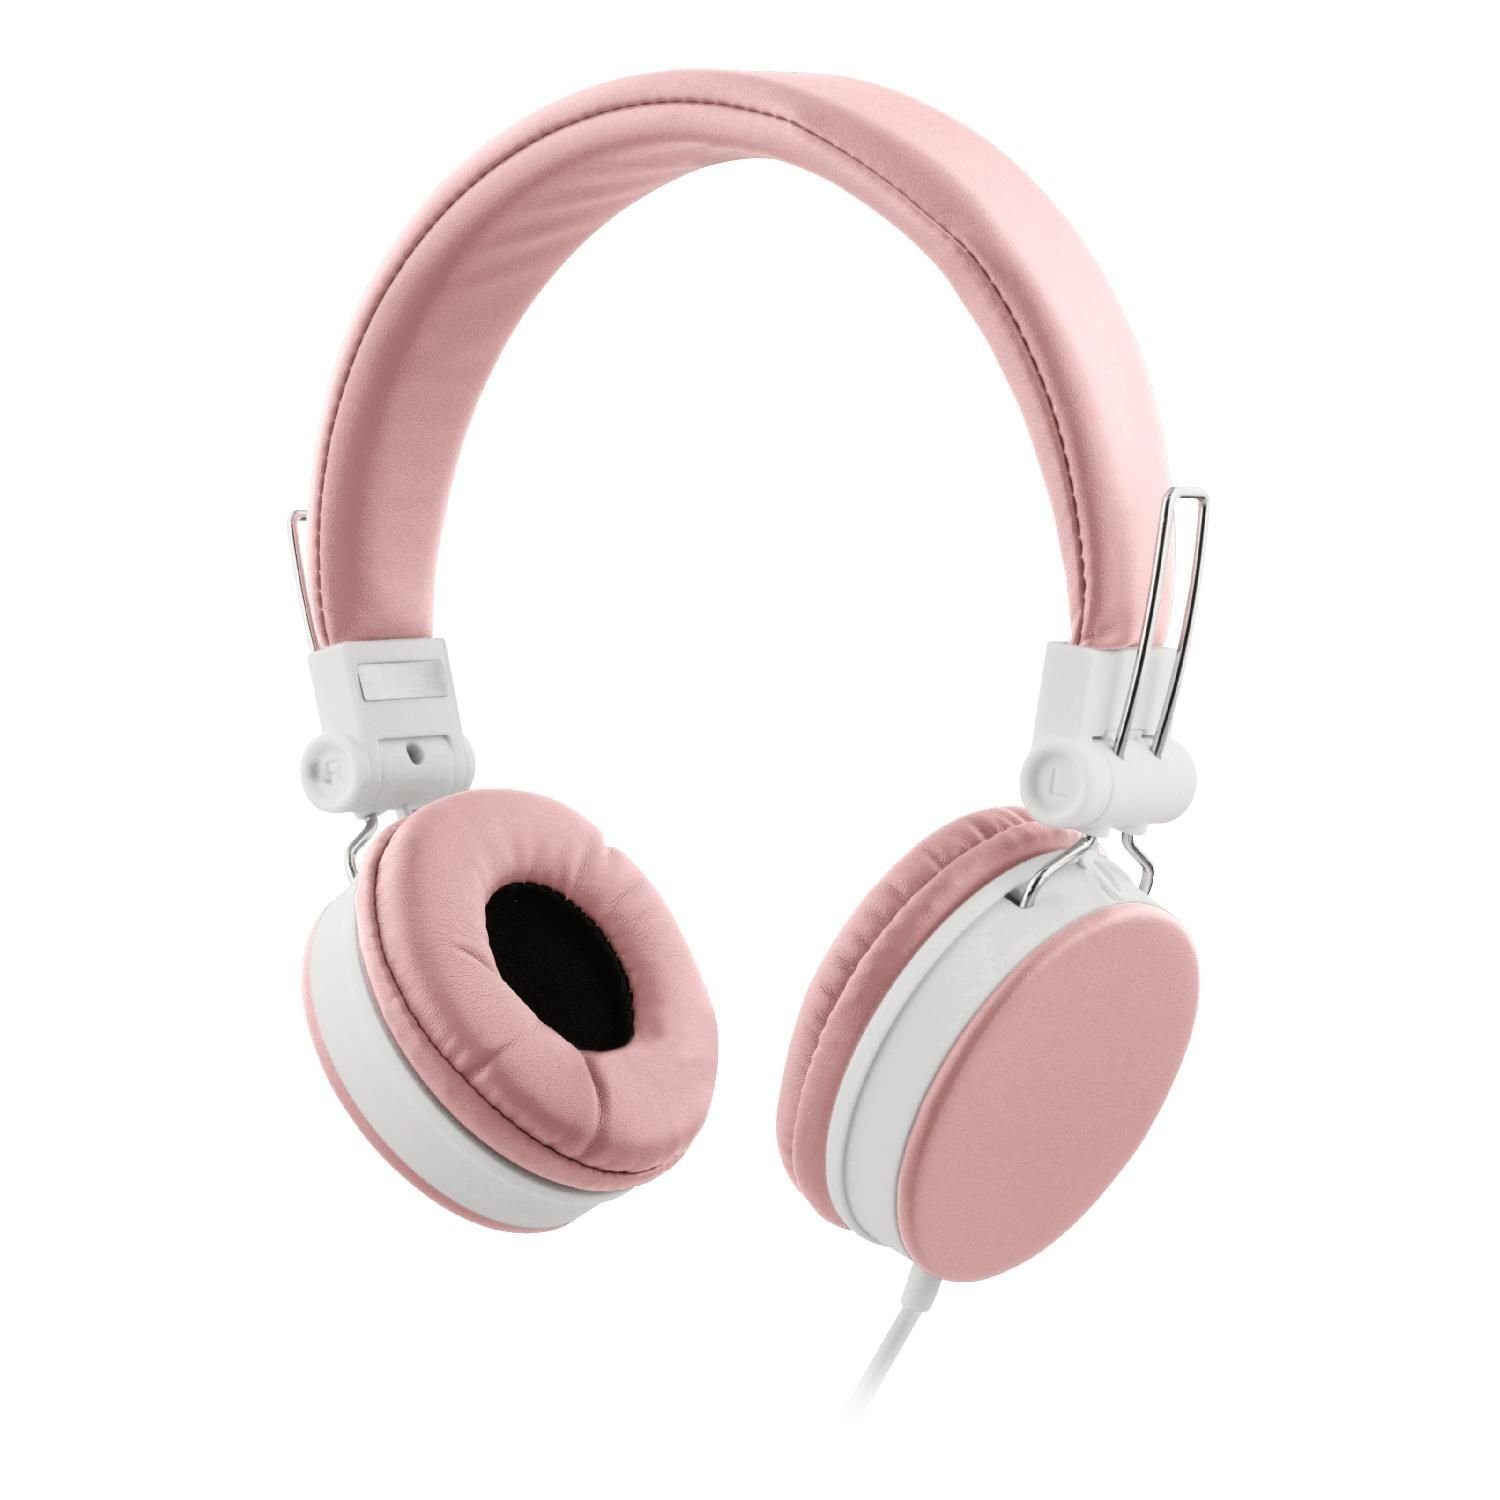 STREETZ Kopfhörer 1,2m pink 5 Herstellergarantie) Jahre Headset, inkl. Klinkenanschluss rosa, On-Ear-Kopfhörer (integriertes 3.5mm Kabel Mikrofon, faltbares / Ohrpolster